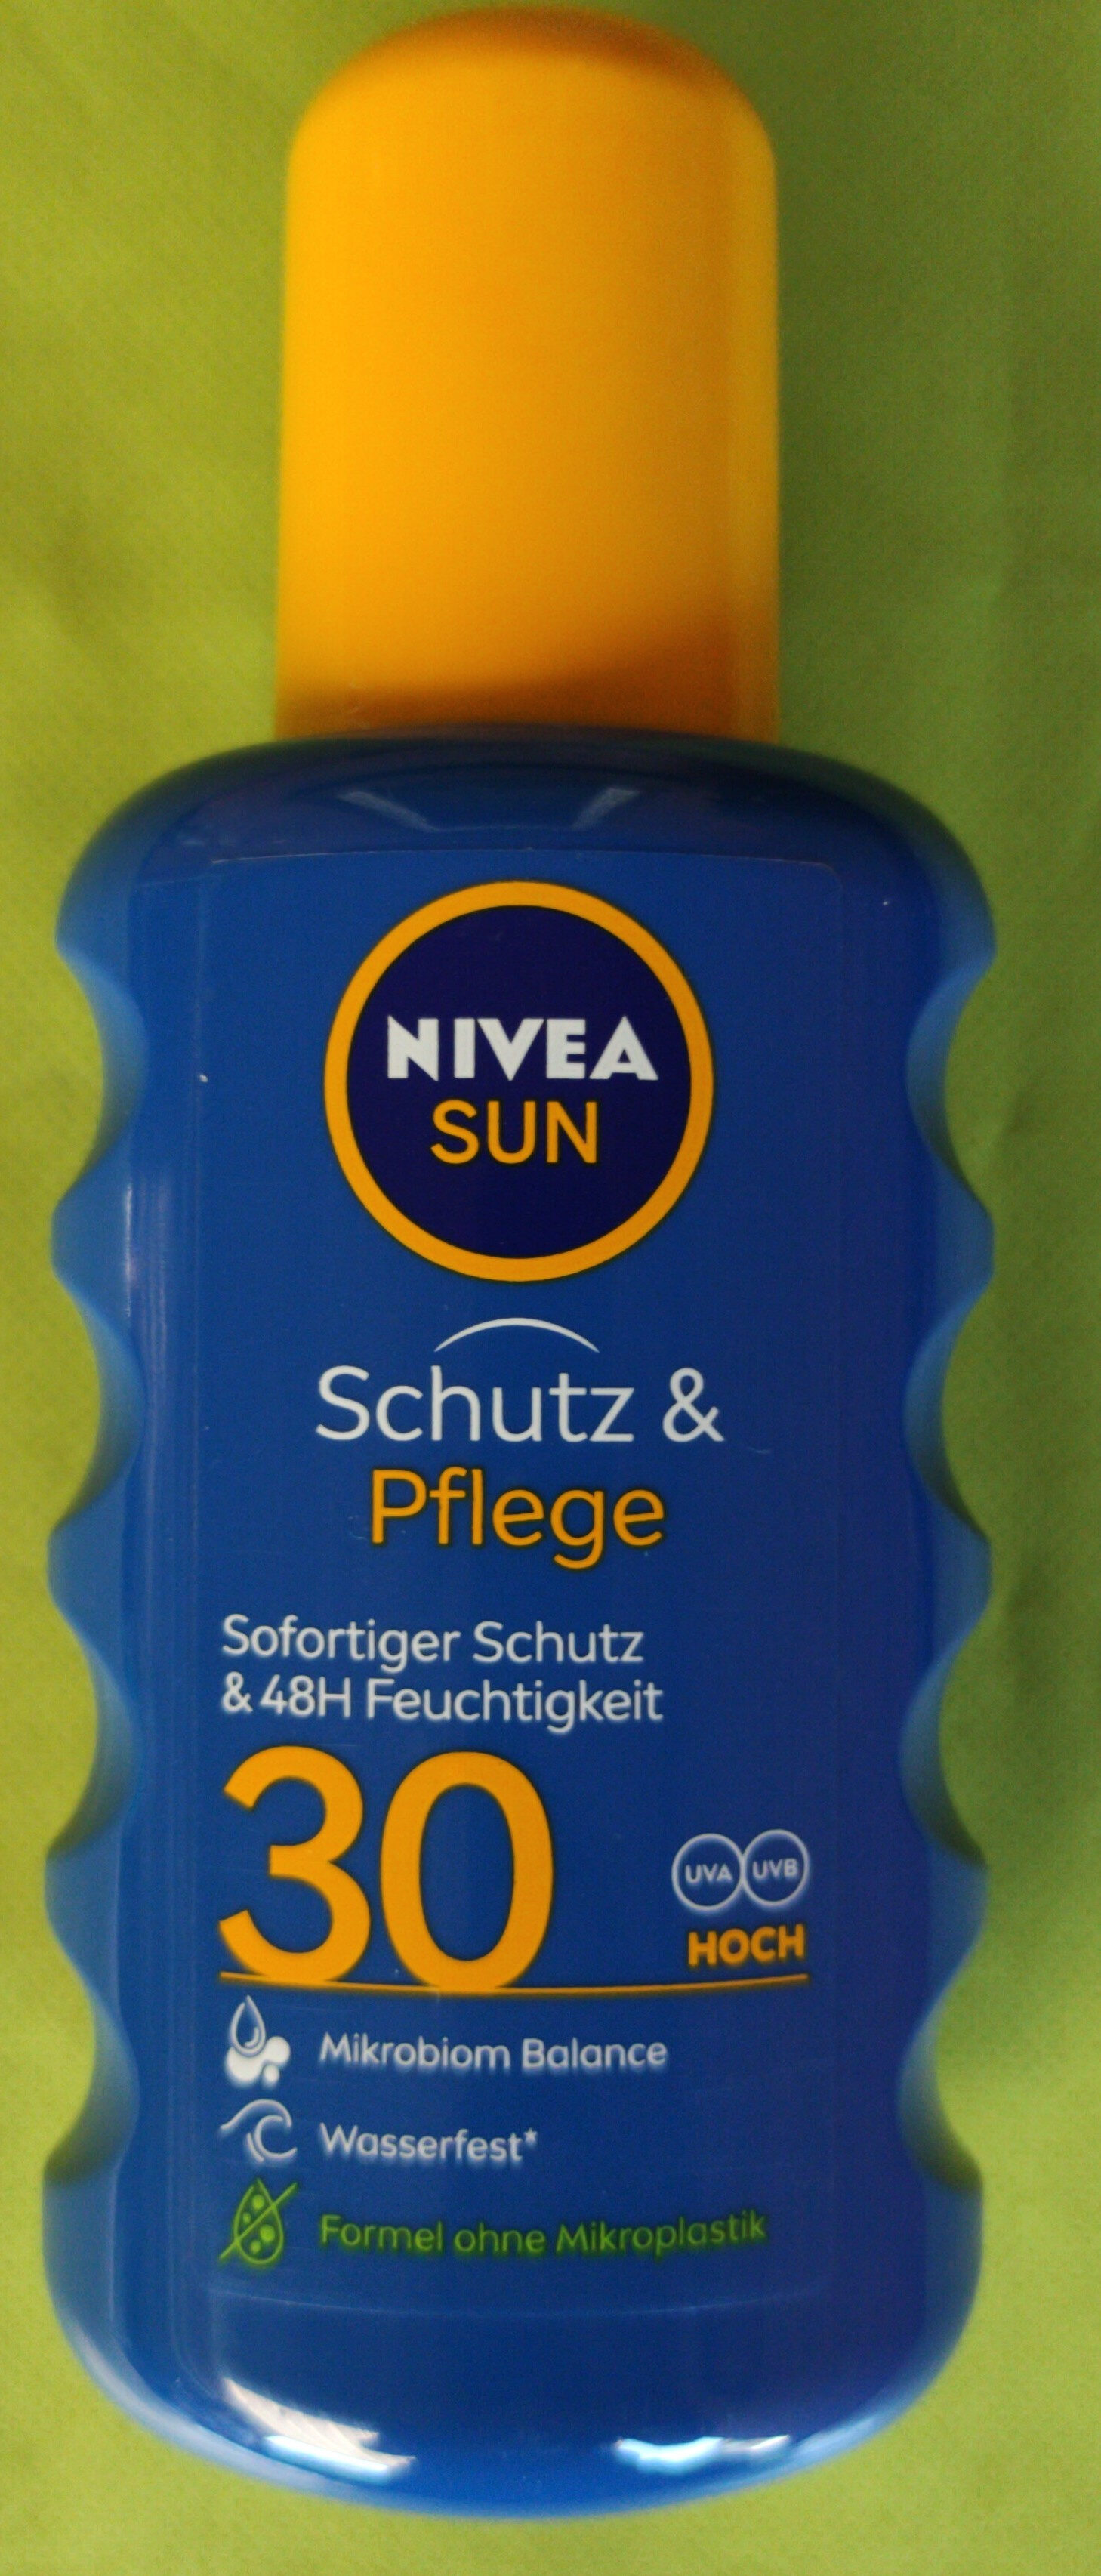 Schutz & Pflege Sonnenspray 30 - Product - de